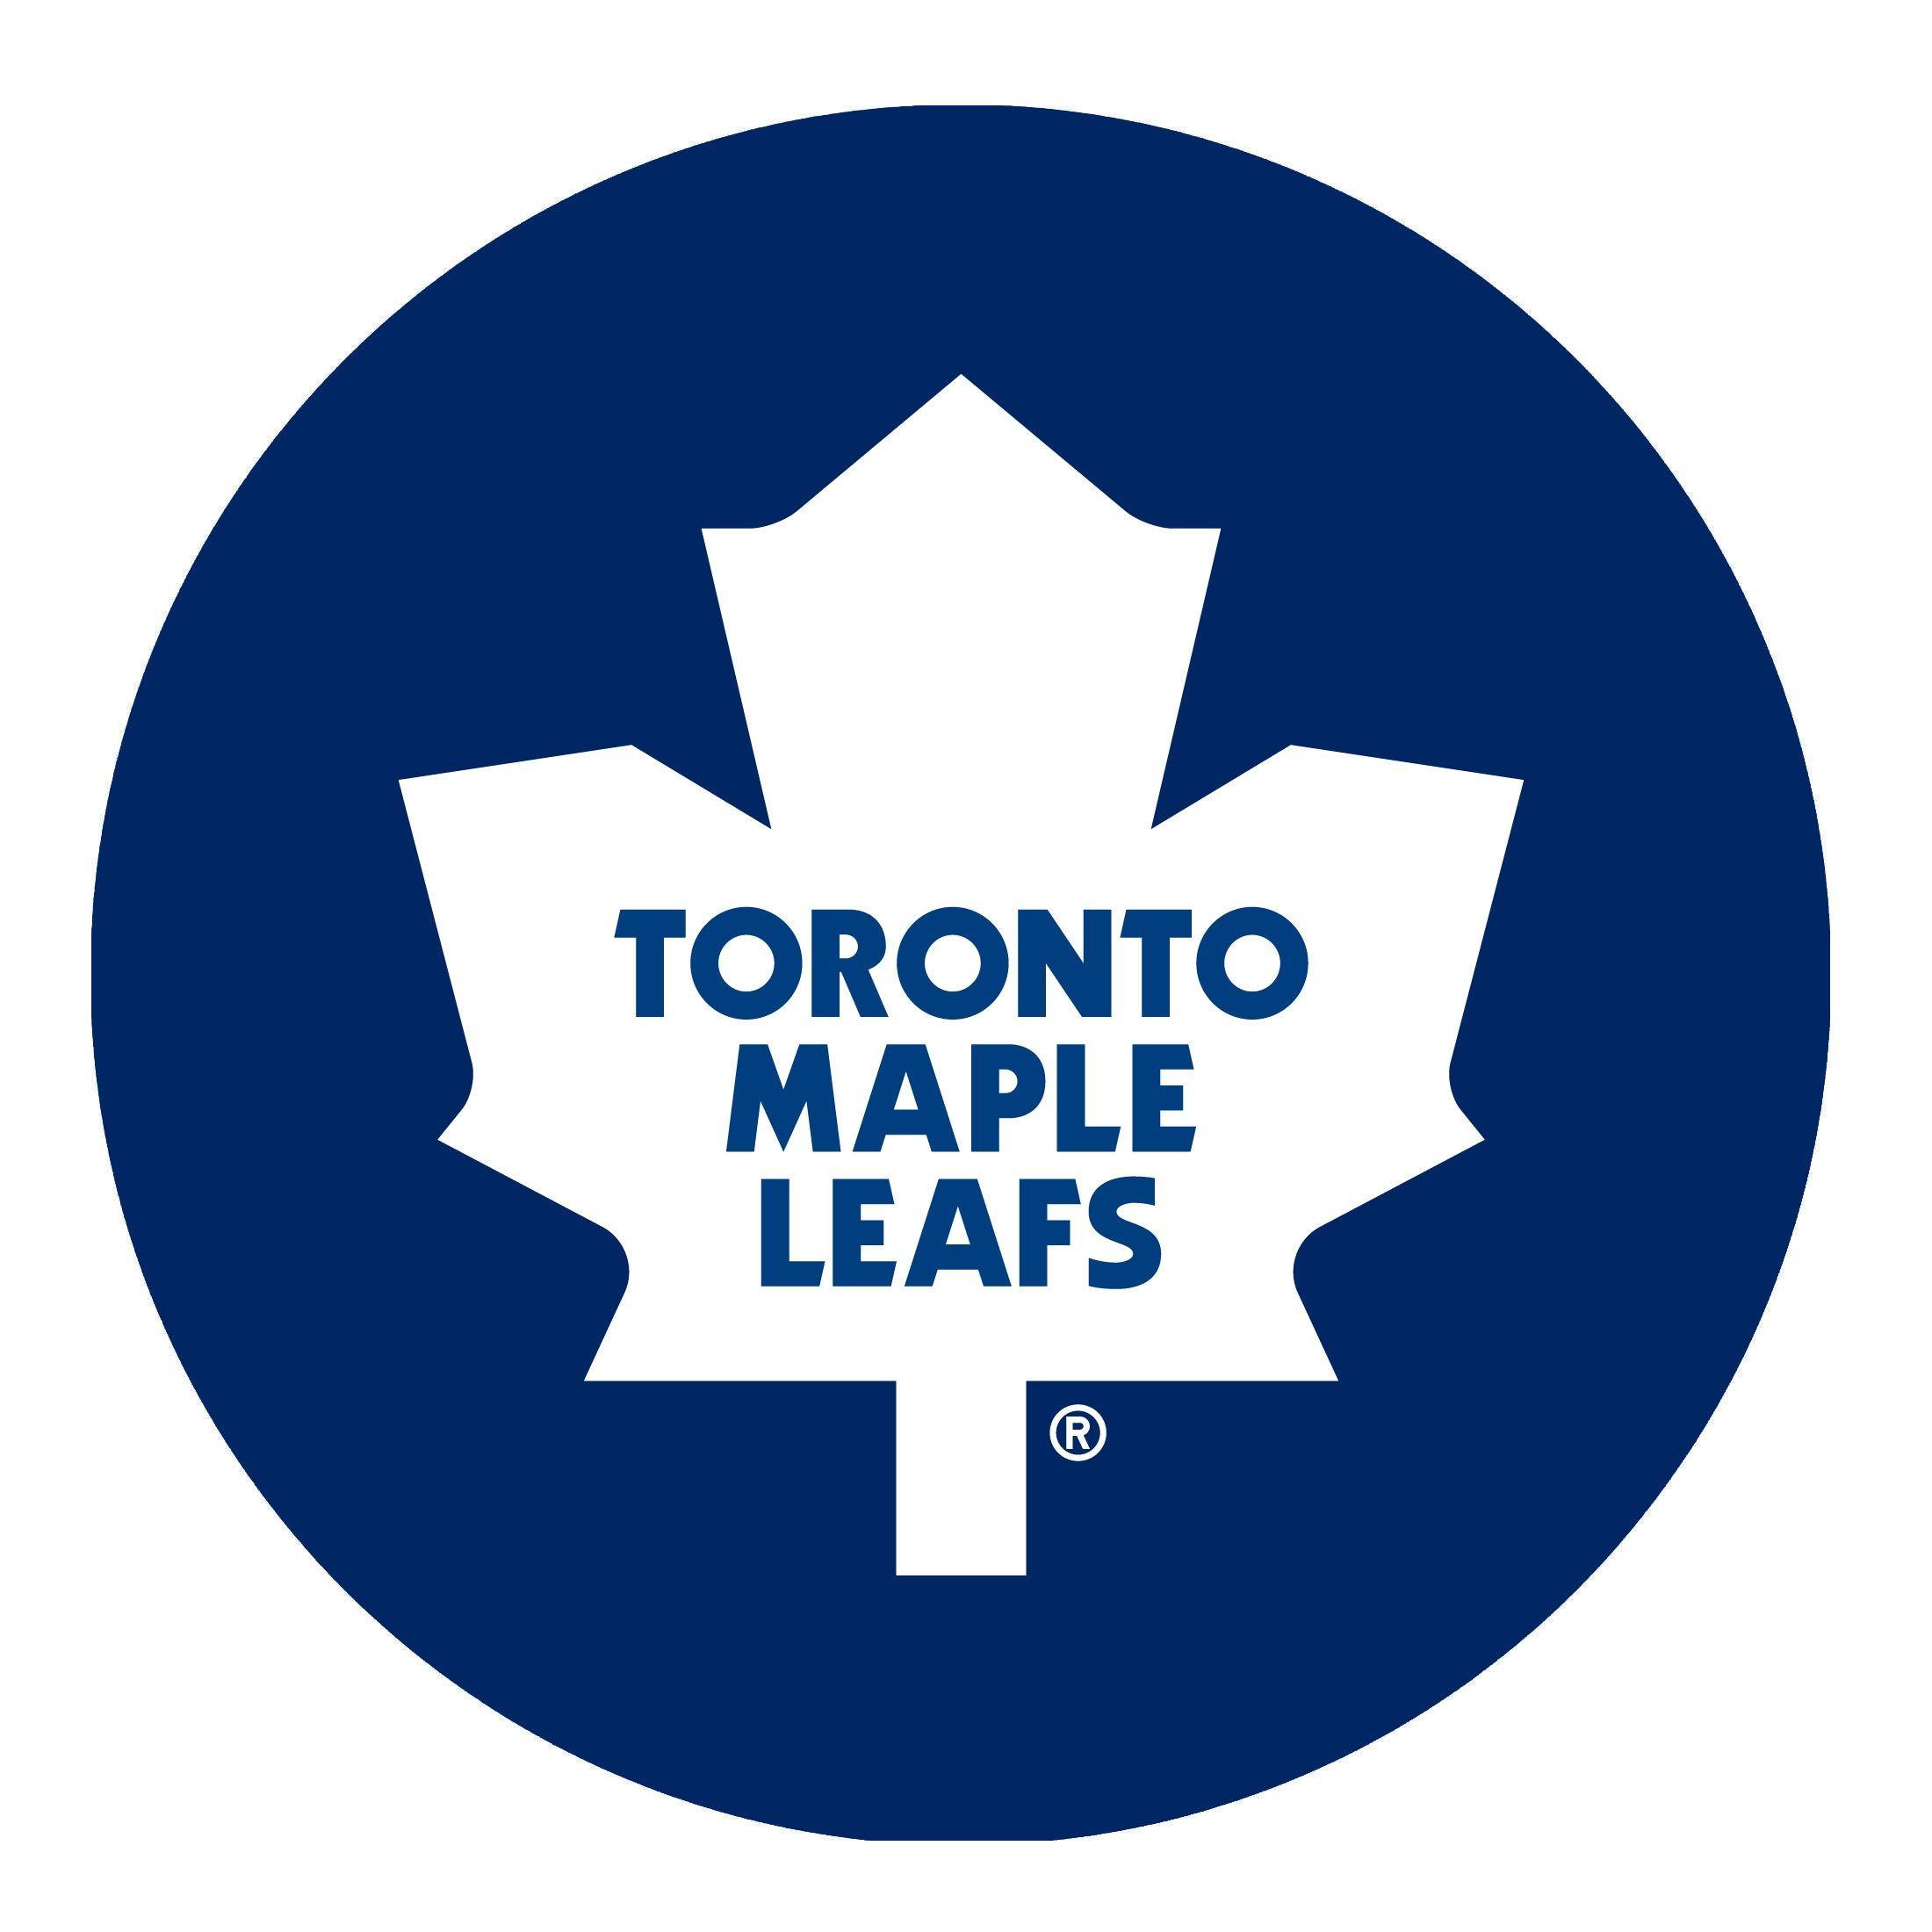 Toronto Maple Leaves Logo - The Toronto Maple Leafs